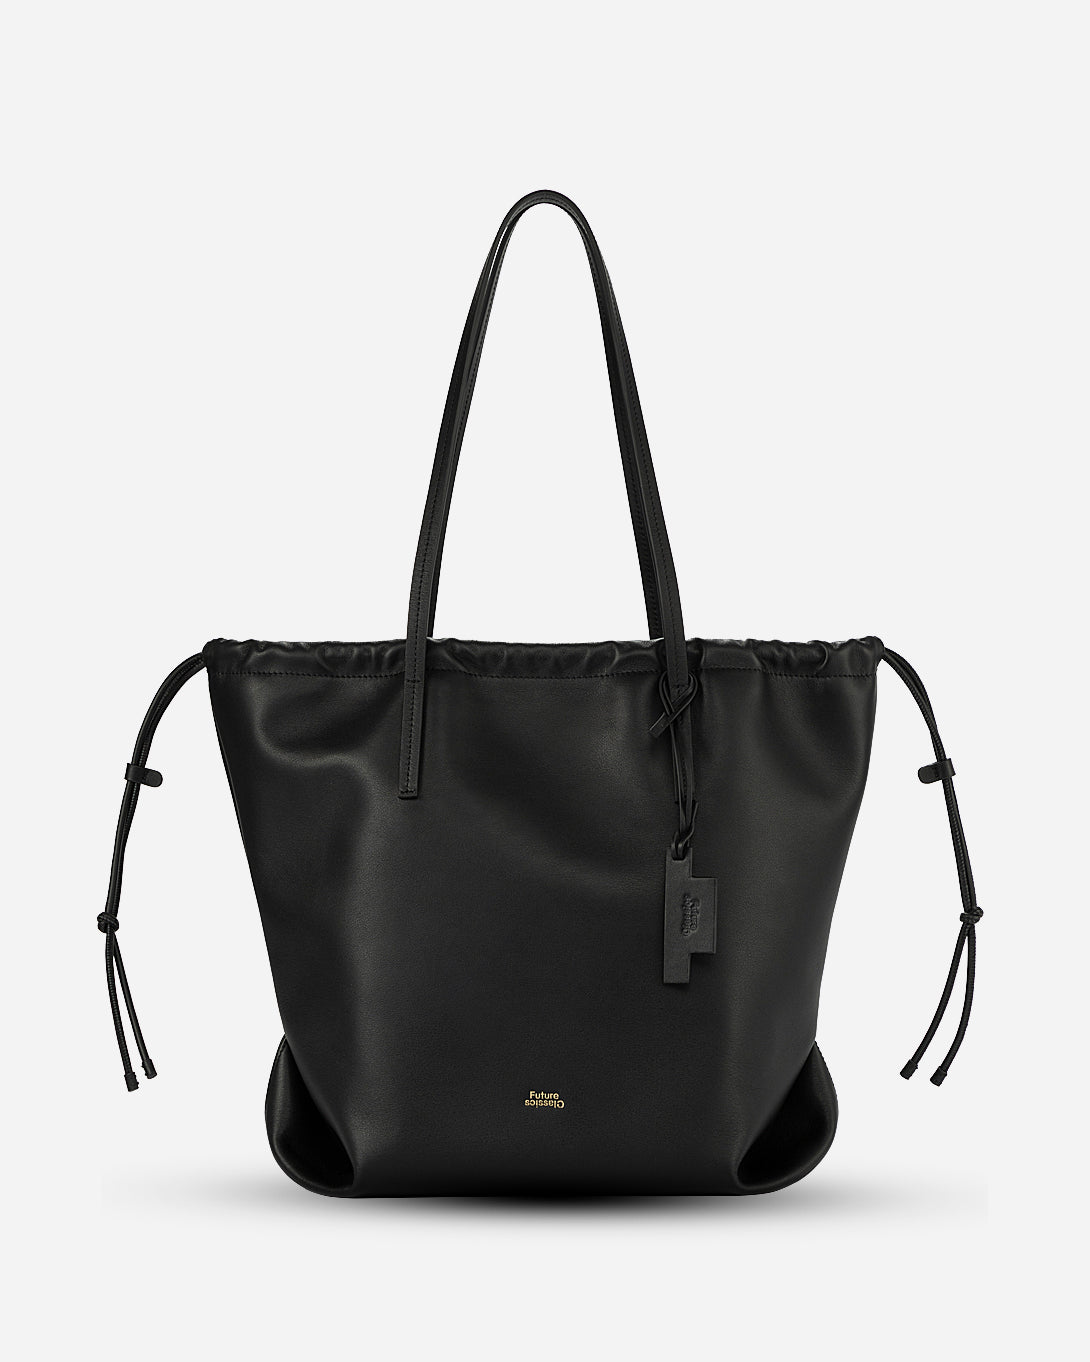 Black / OS Large Pull Tote Lined Drawstring Tote bag